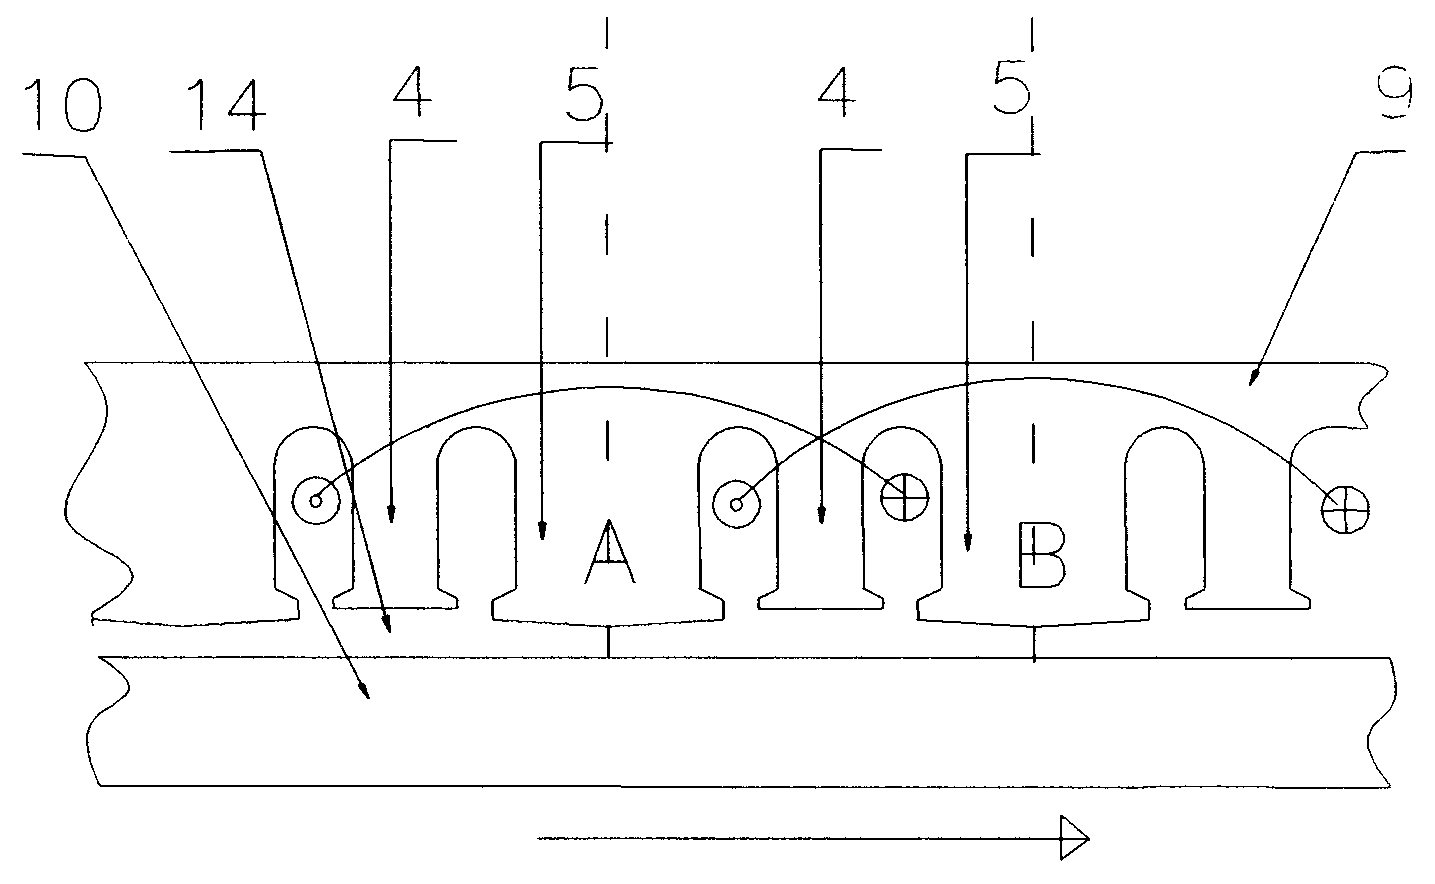 Motor and sine stator